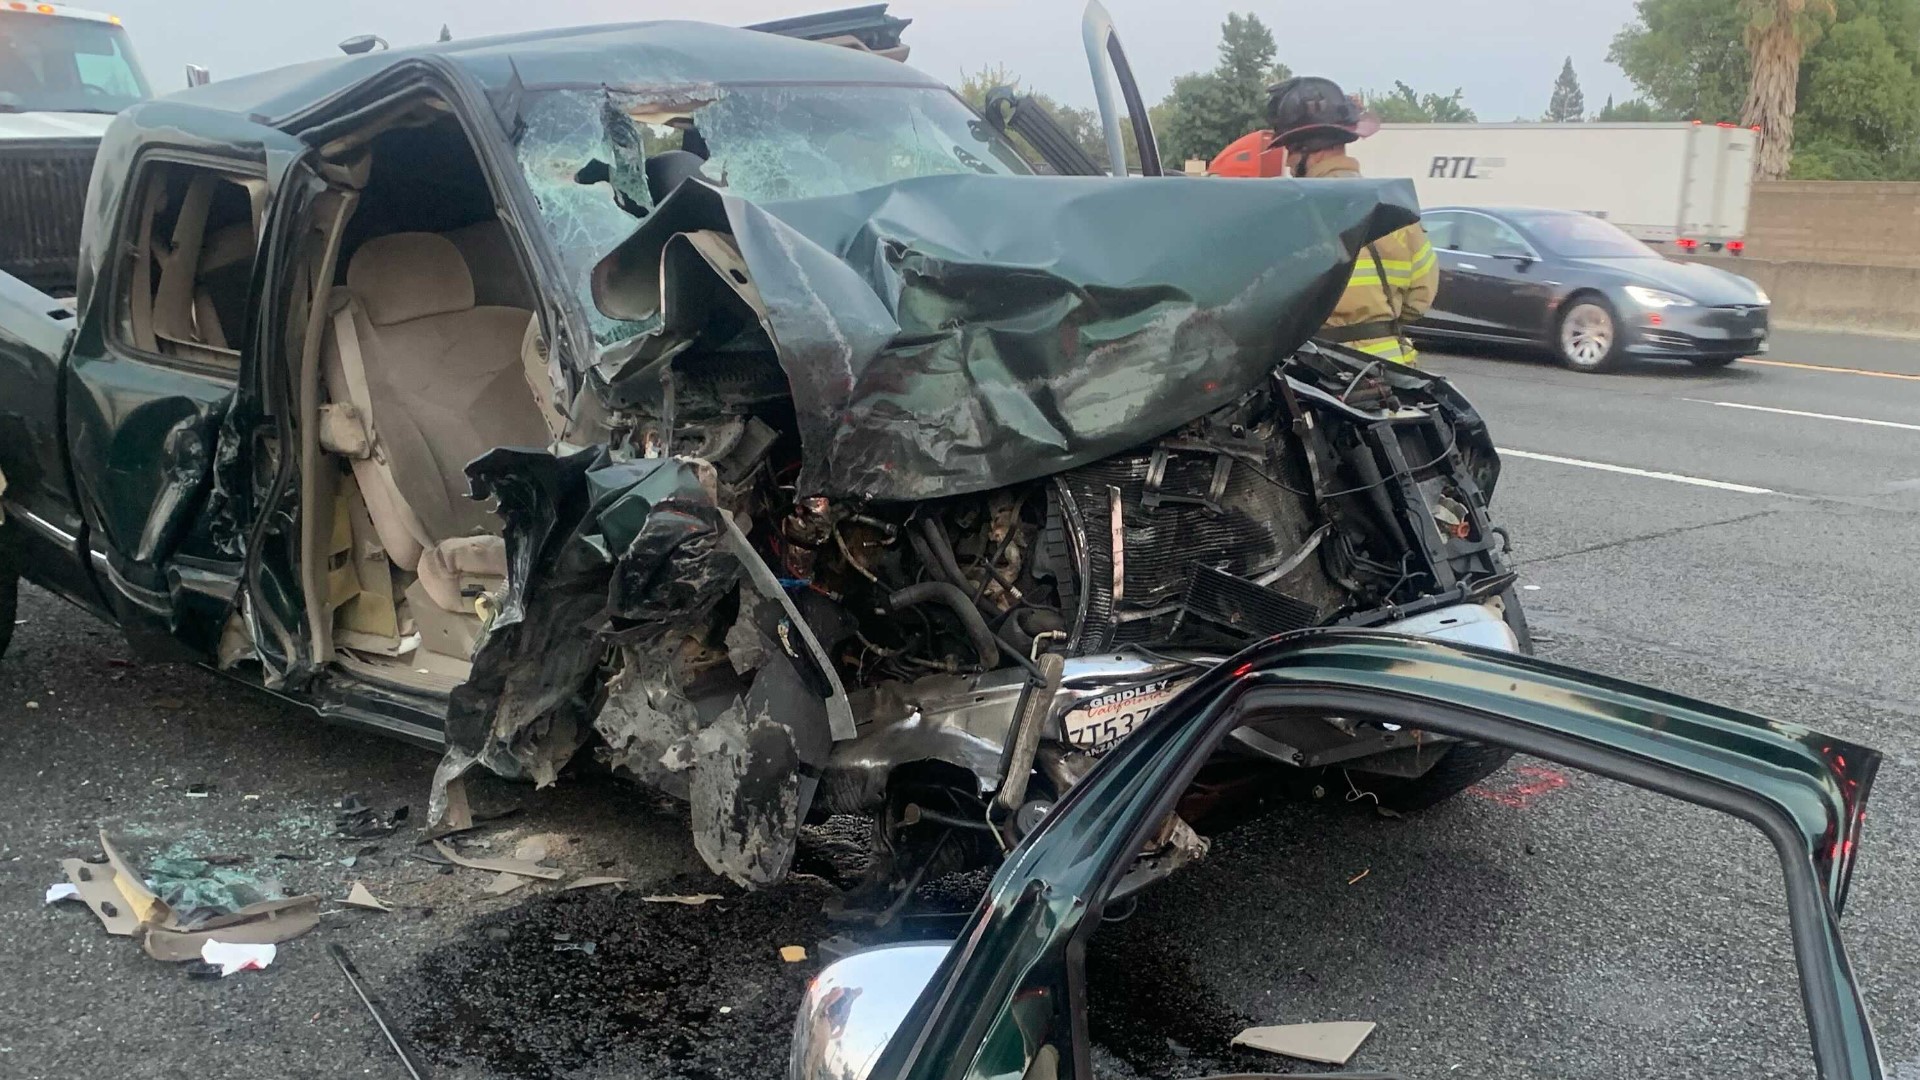 I80 deadly crash leaves 2 dead, 2 hurt near Sacramento